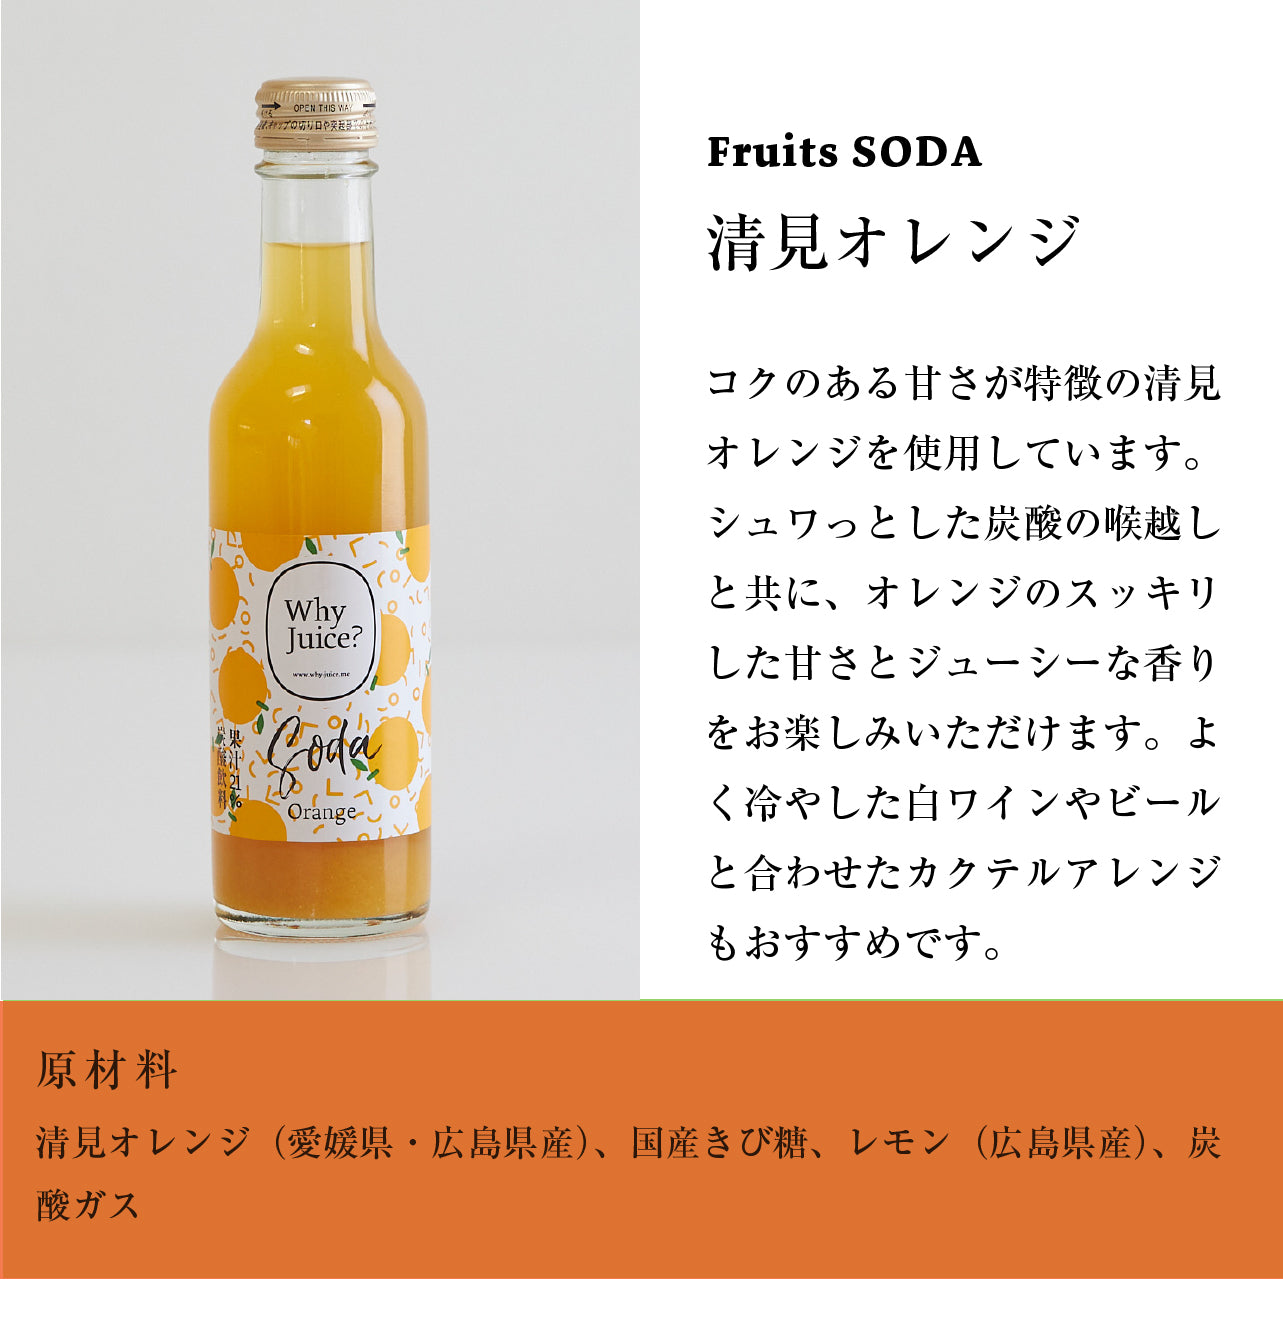 Fruits SODA 3種類ミックスセット (30本入)【減農薬・無農薬の果物と野菜】